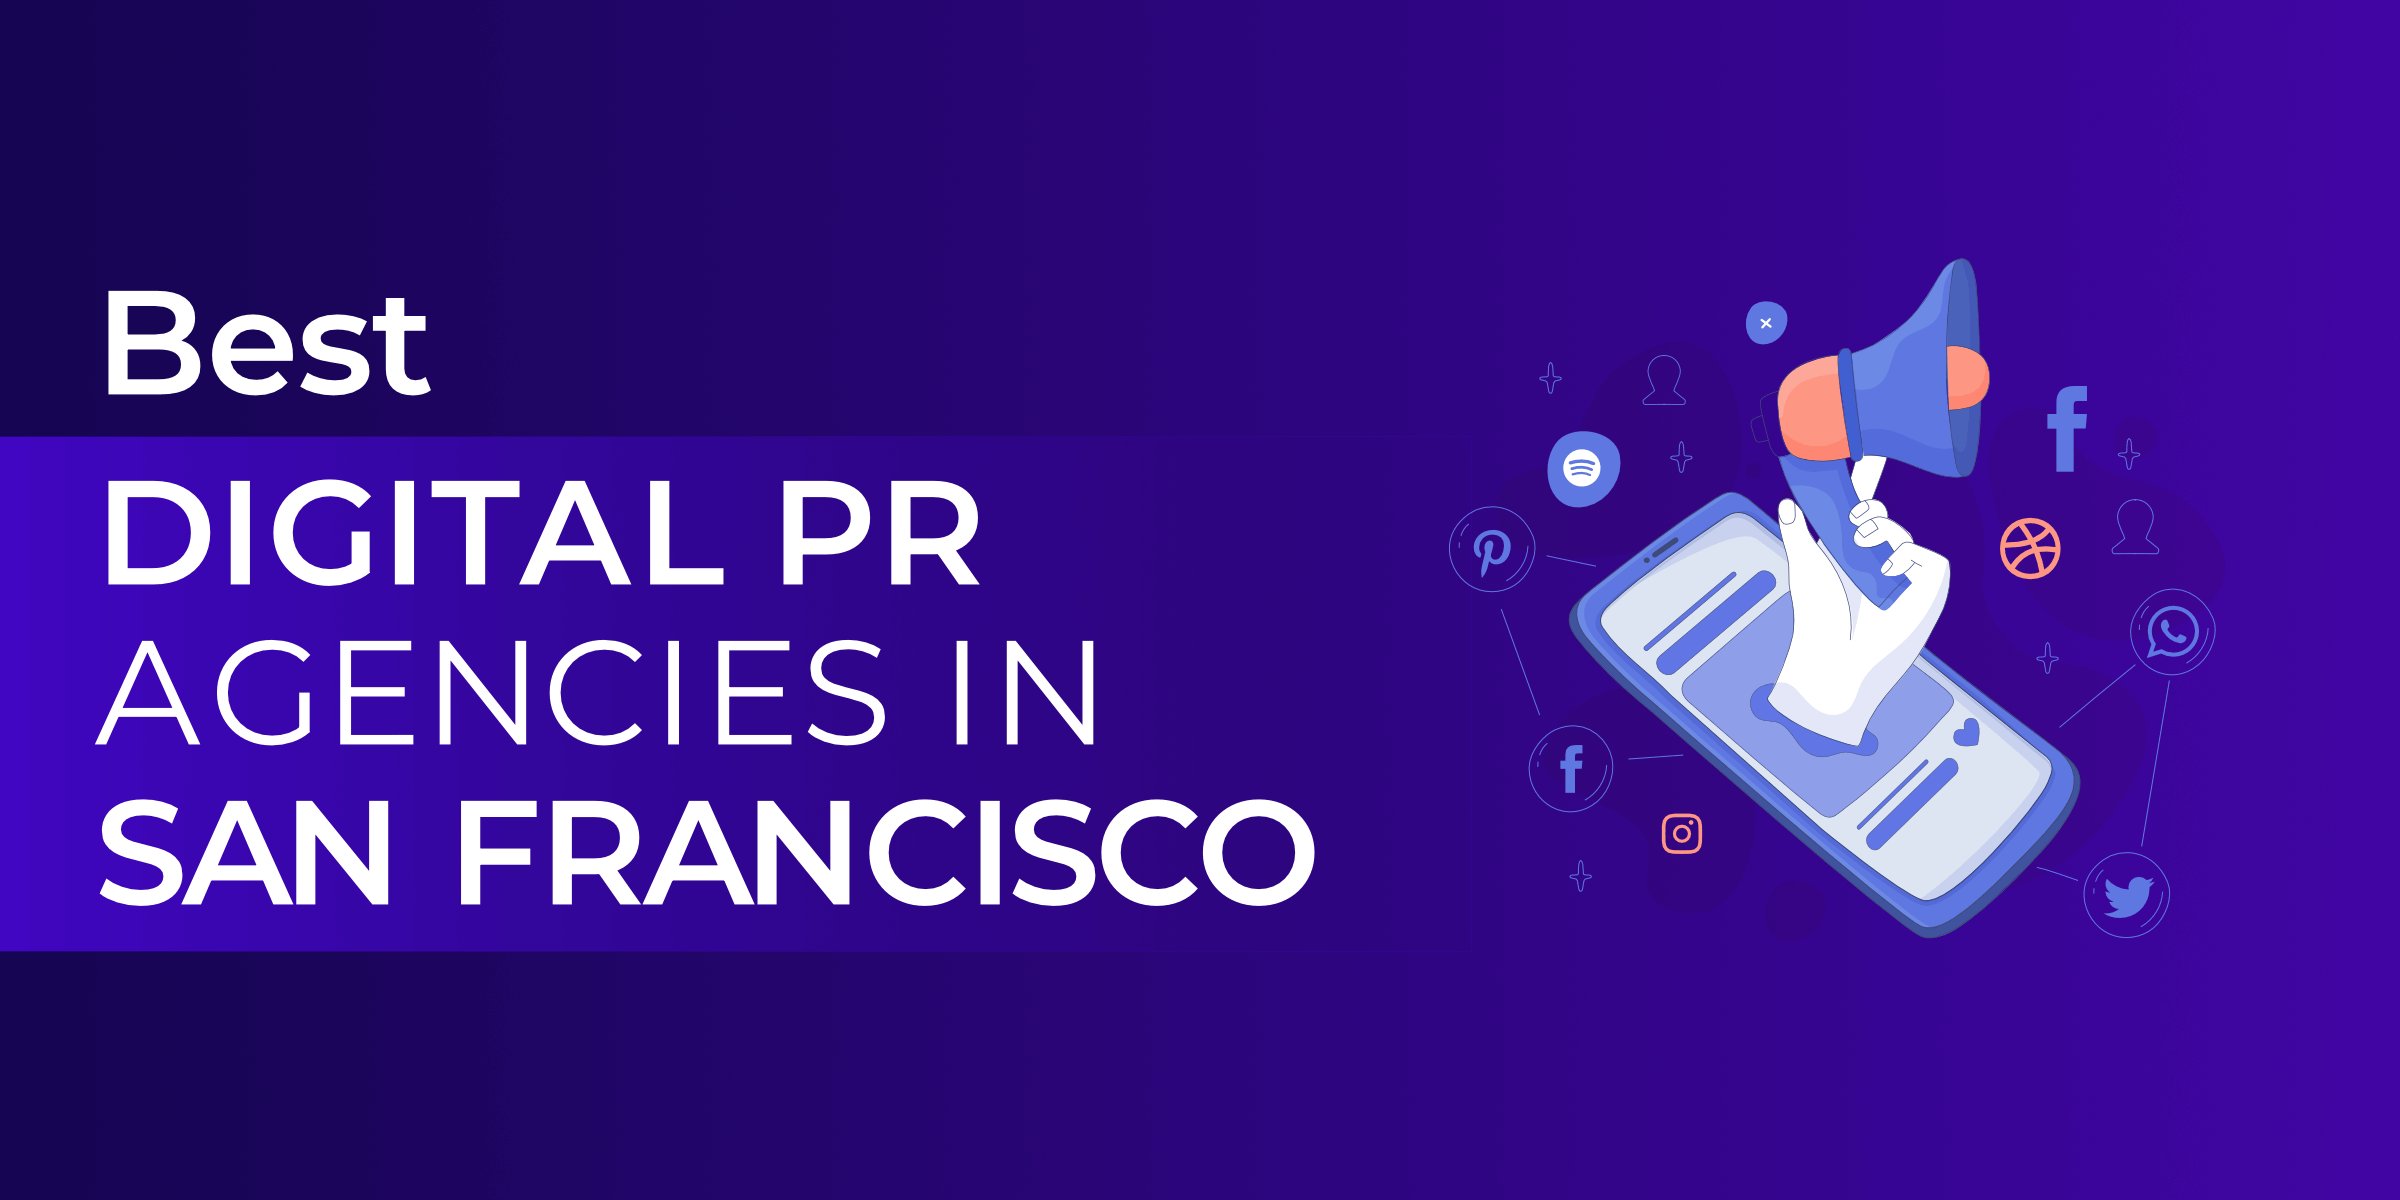 Best Digital PR Agencies in San Francisco